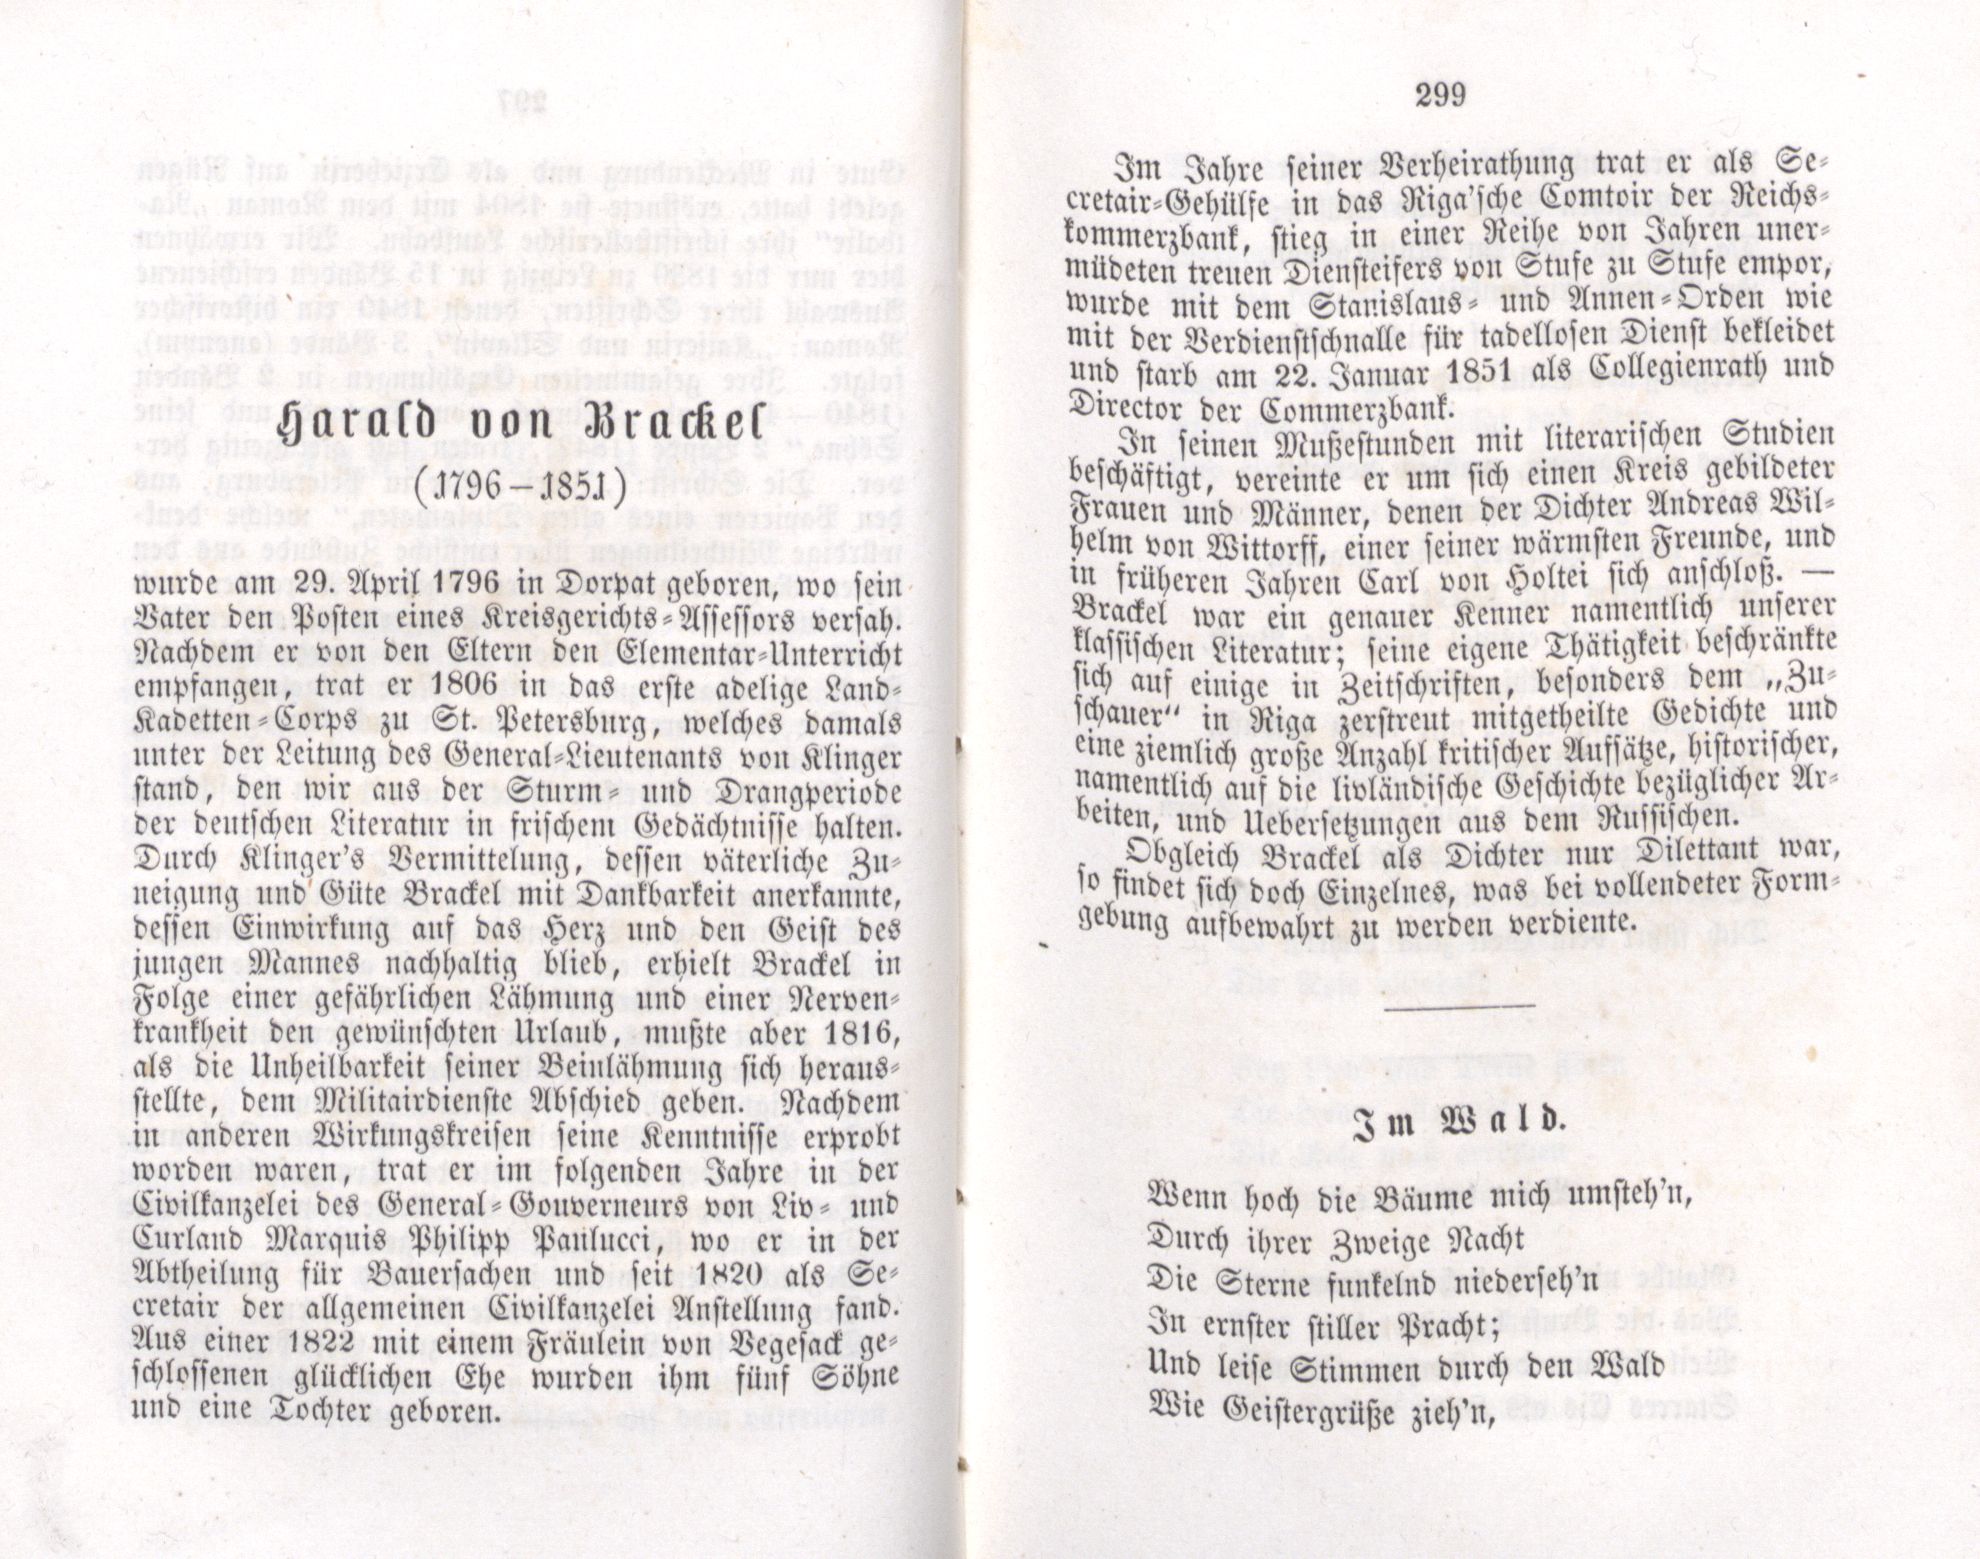 Harald von Brackel (1855) | 1. (298-299) Основной текст